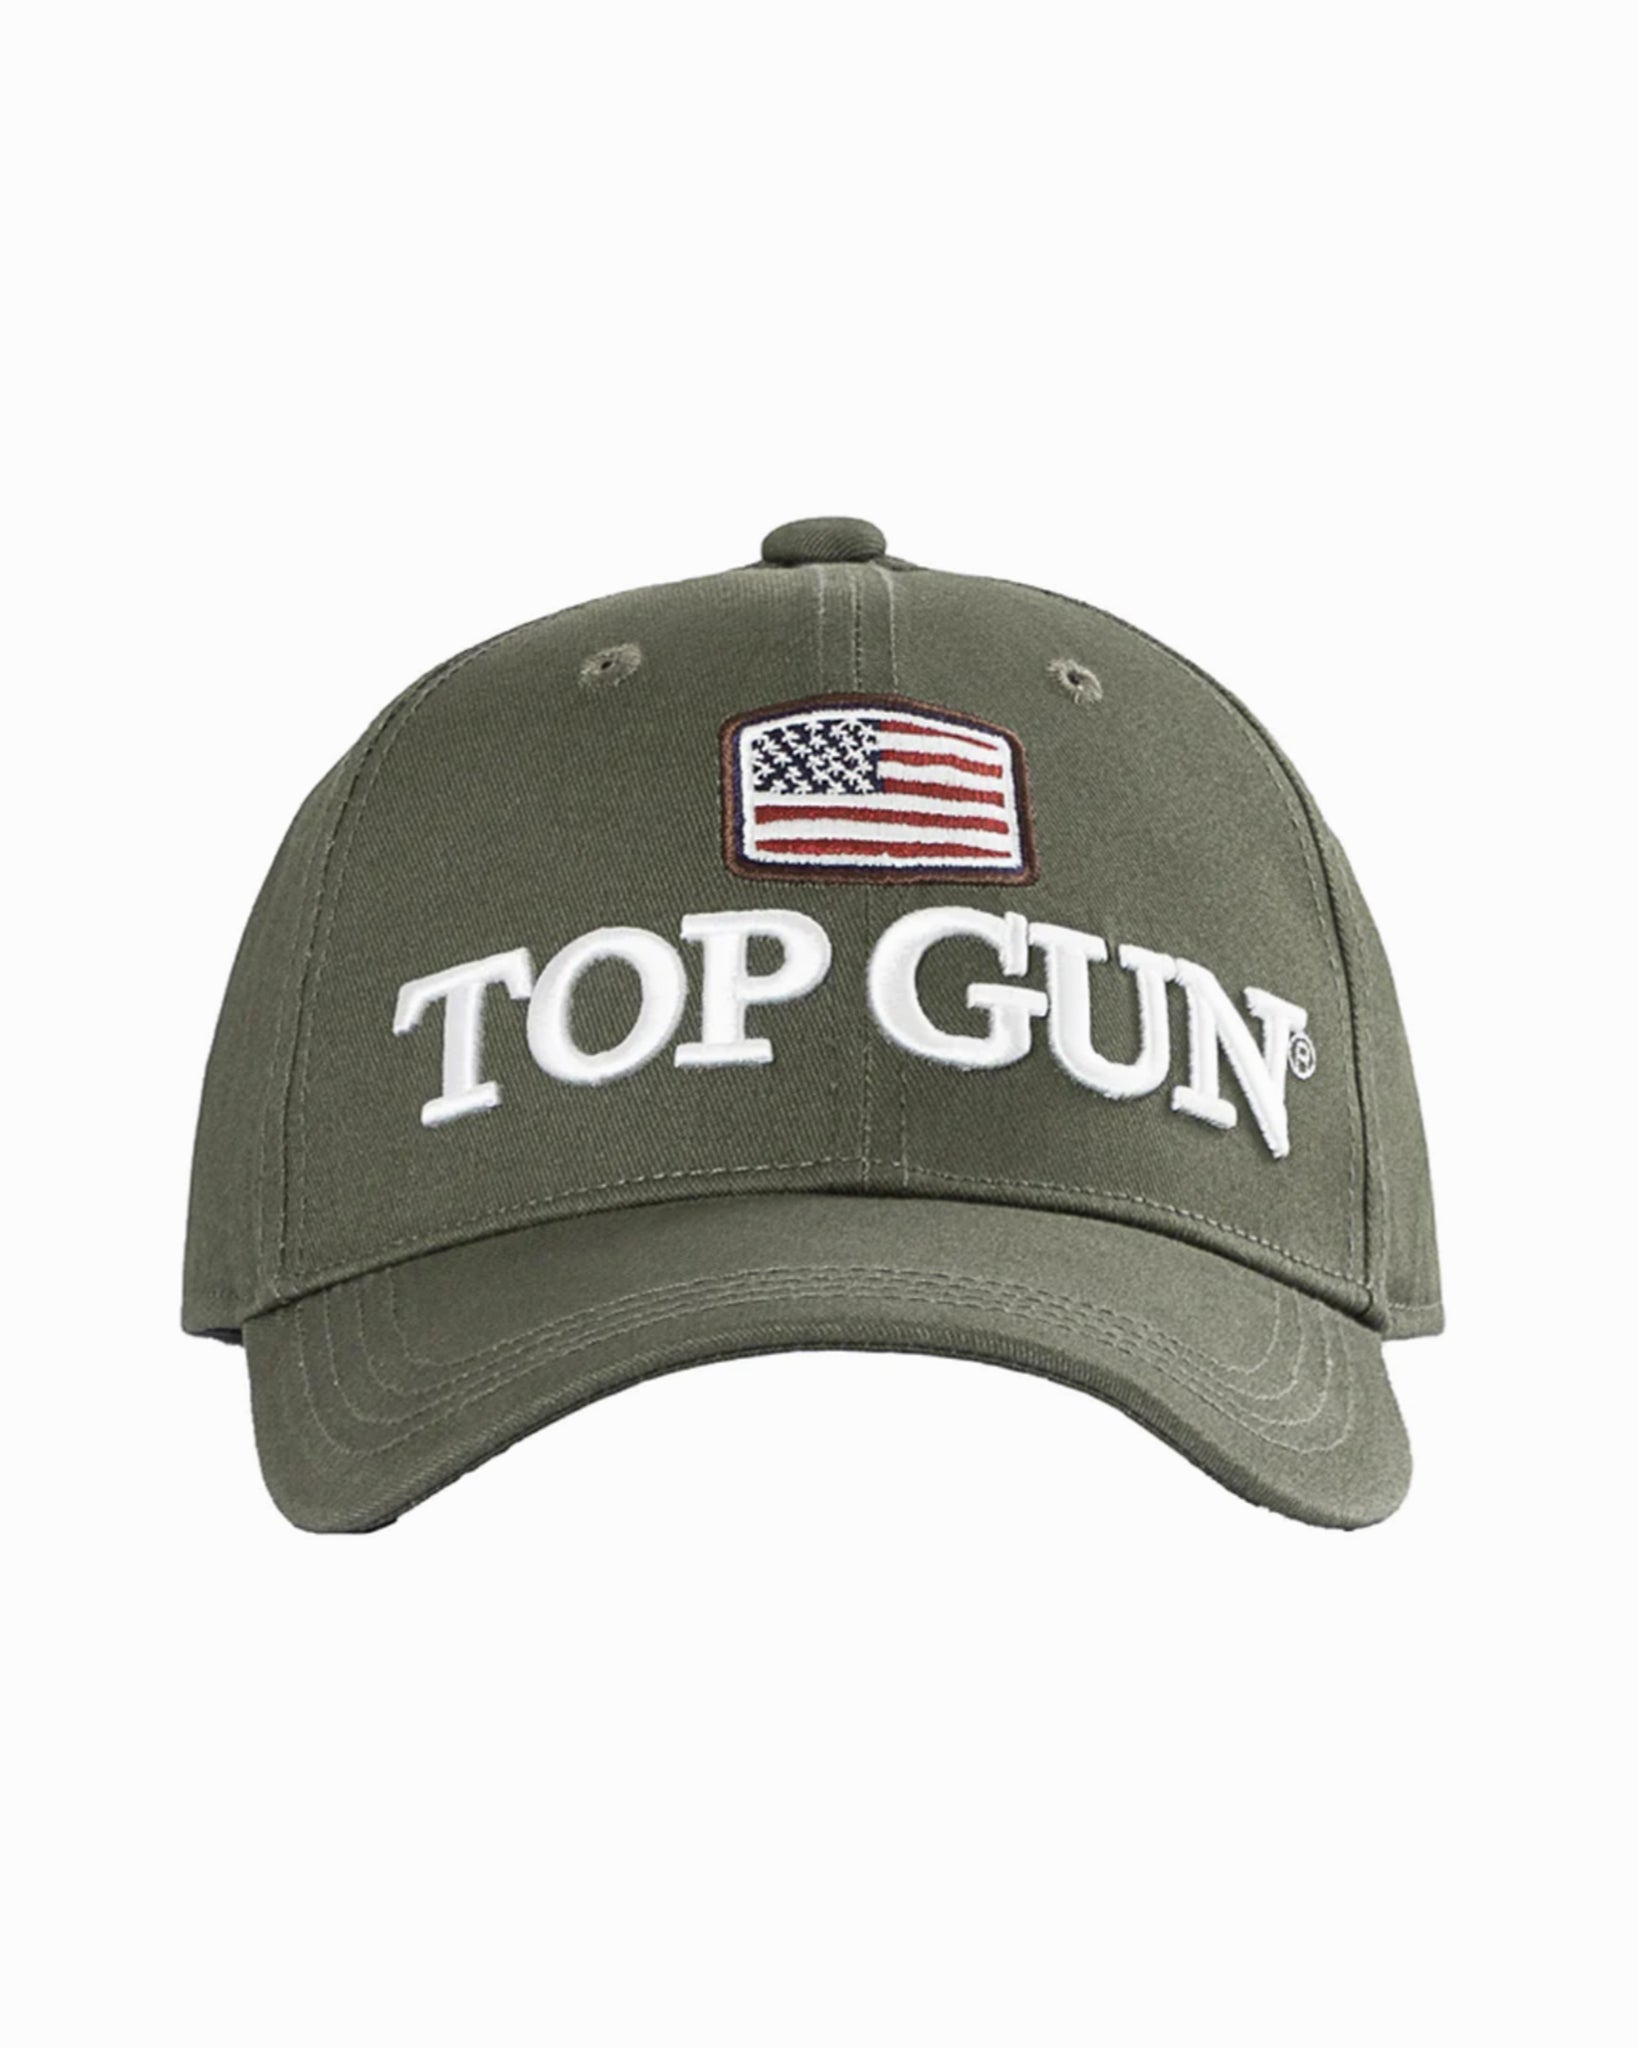 LOGO Top CAP AND TOP Store Gun – GUN® FLAG